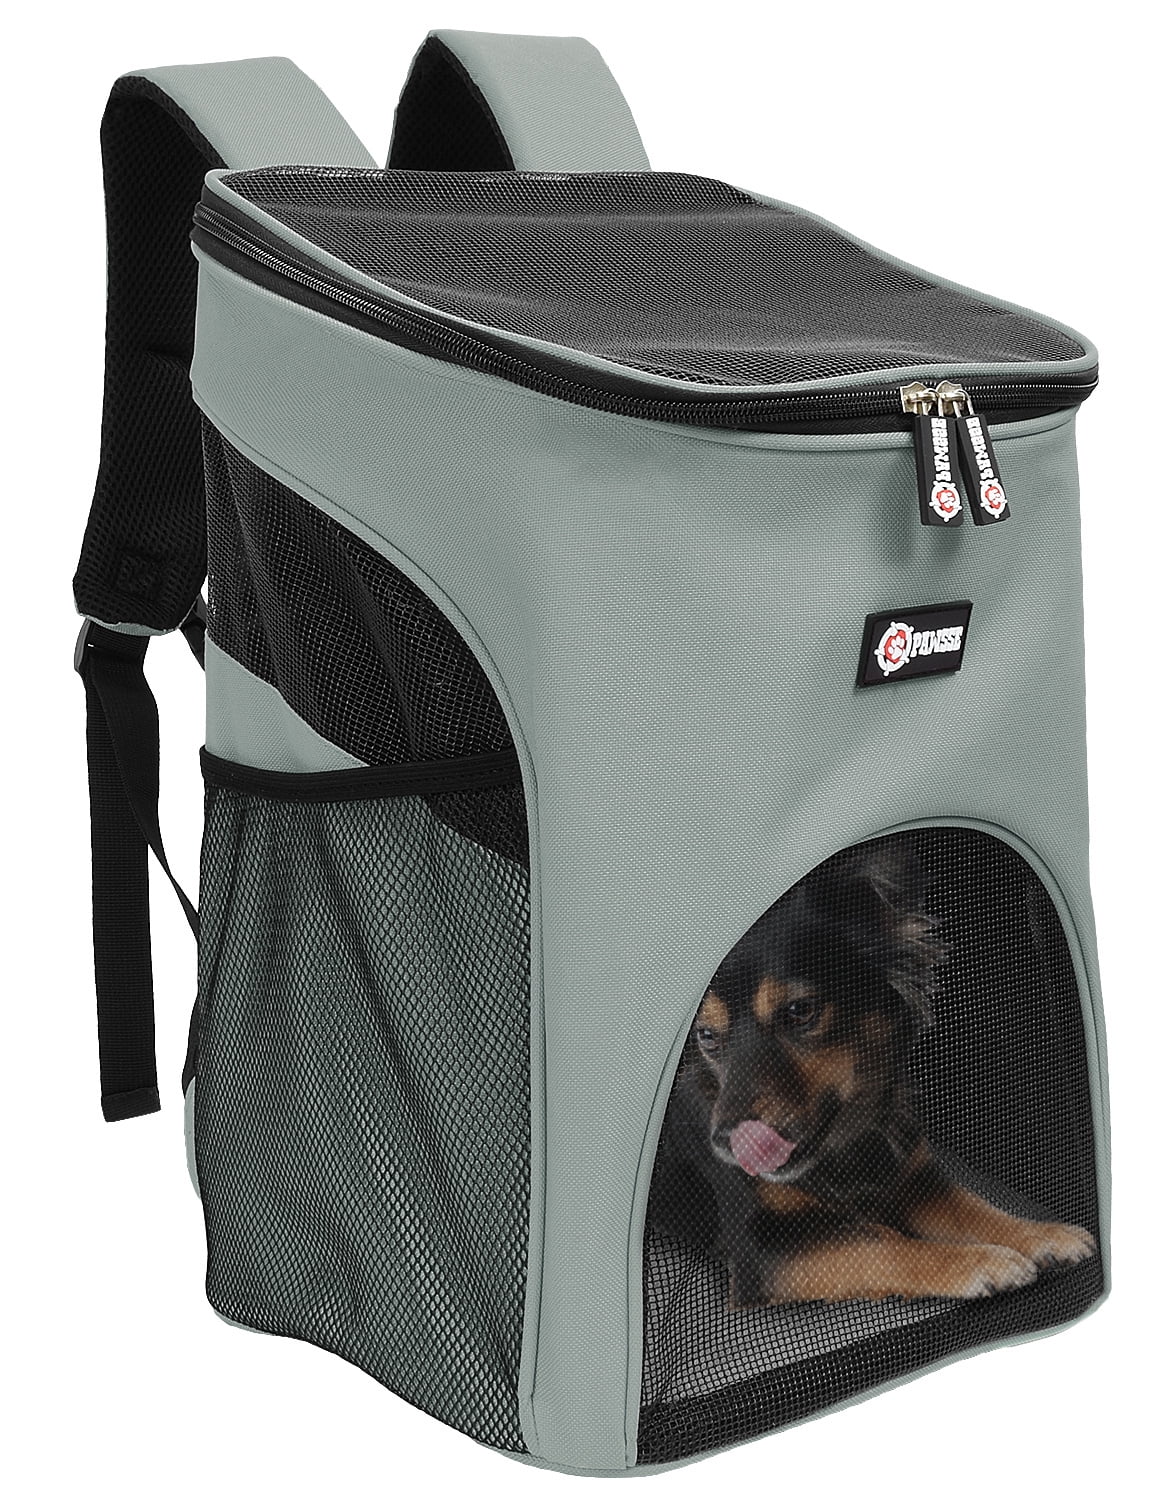 walmart dog backpack